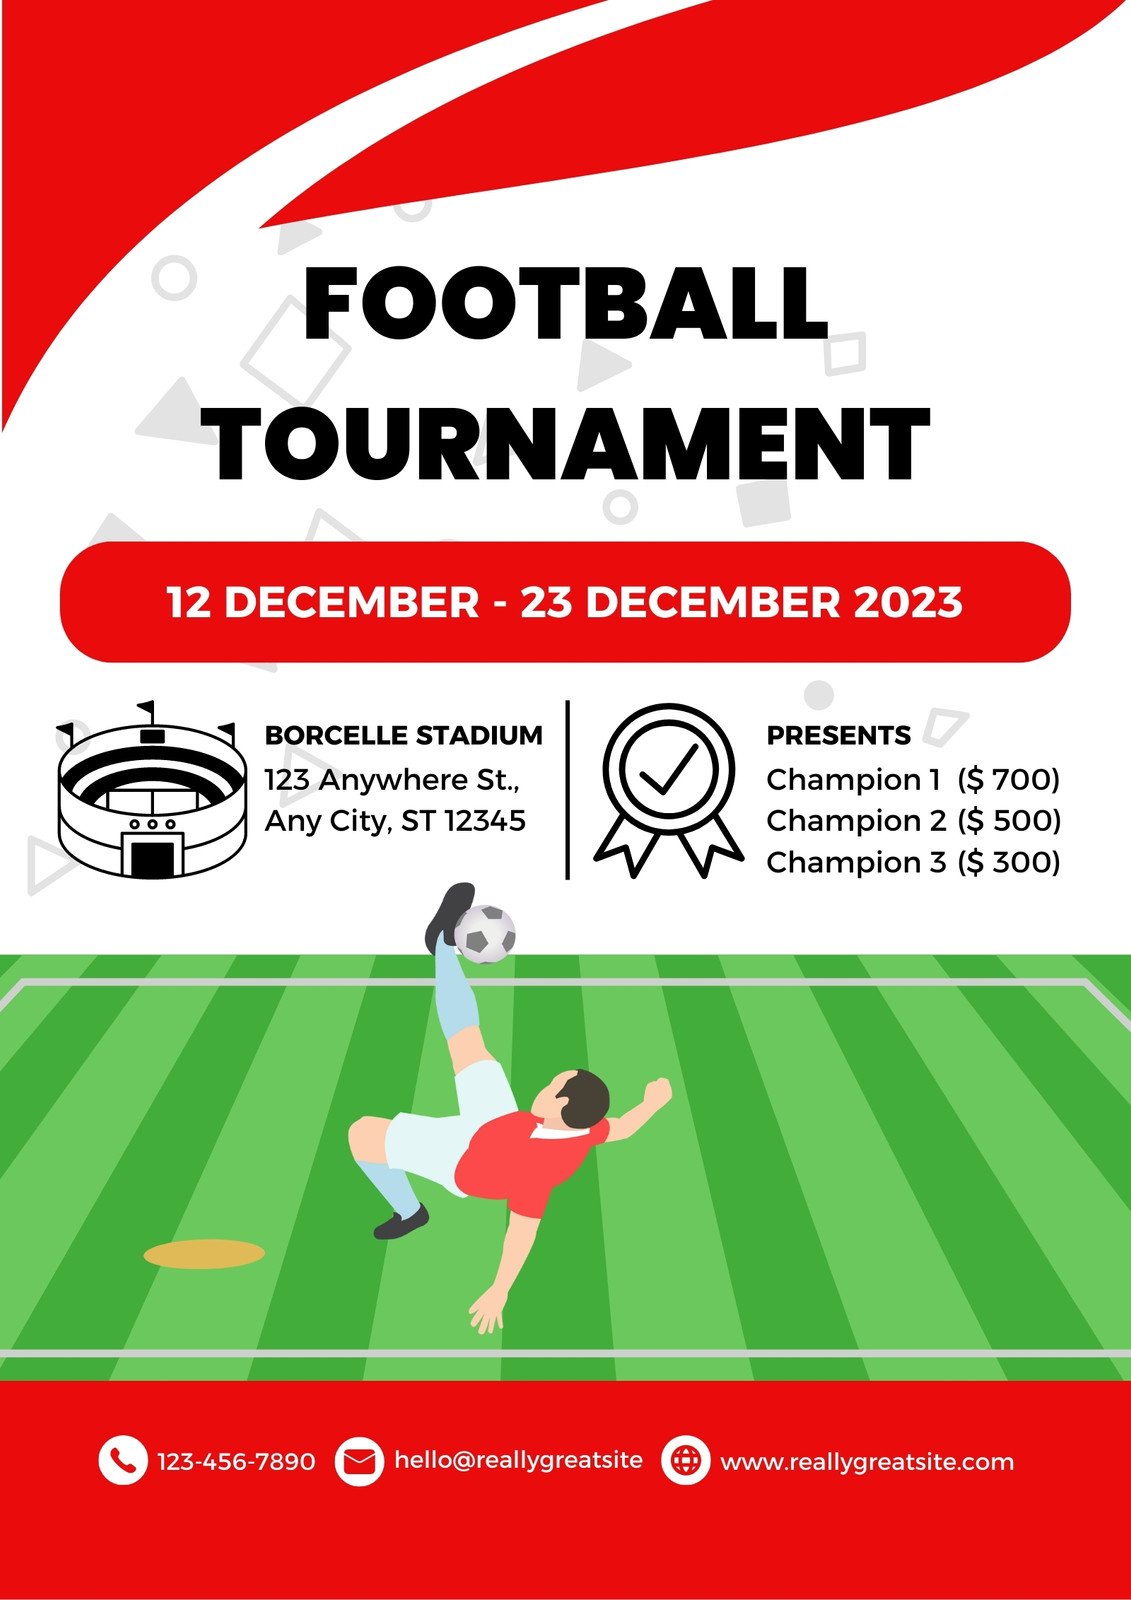 soccer tournament poster ideas